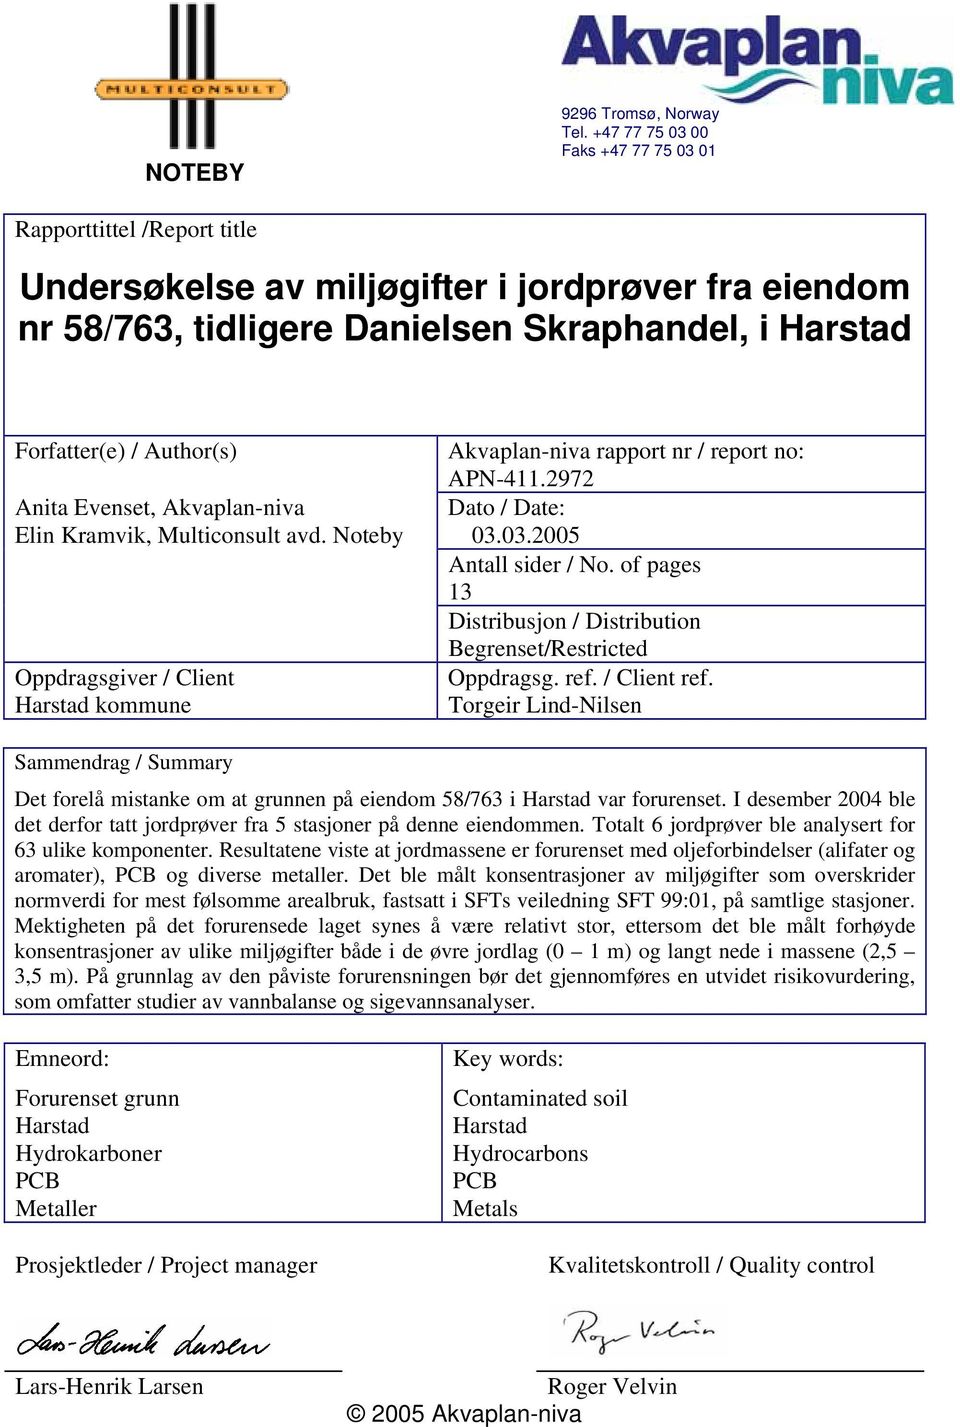 Akvaplan-niva rapport nr / report no: APN-411.2972 Anita Evenset, Akvaplan-niva Dato / Date: Elin Kramvik, Multiconsult avd. Noteby 03.03.2005 Antall sider / No.